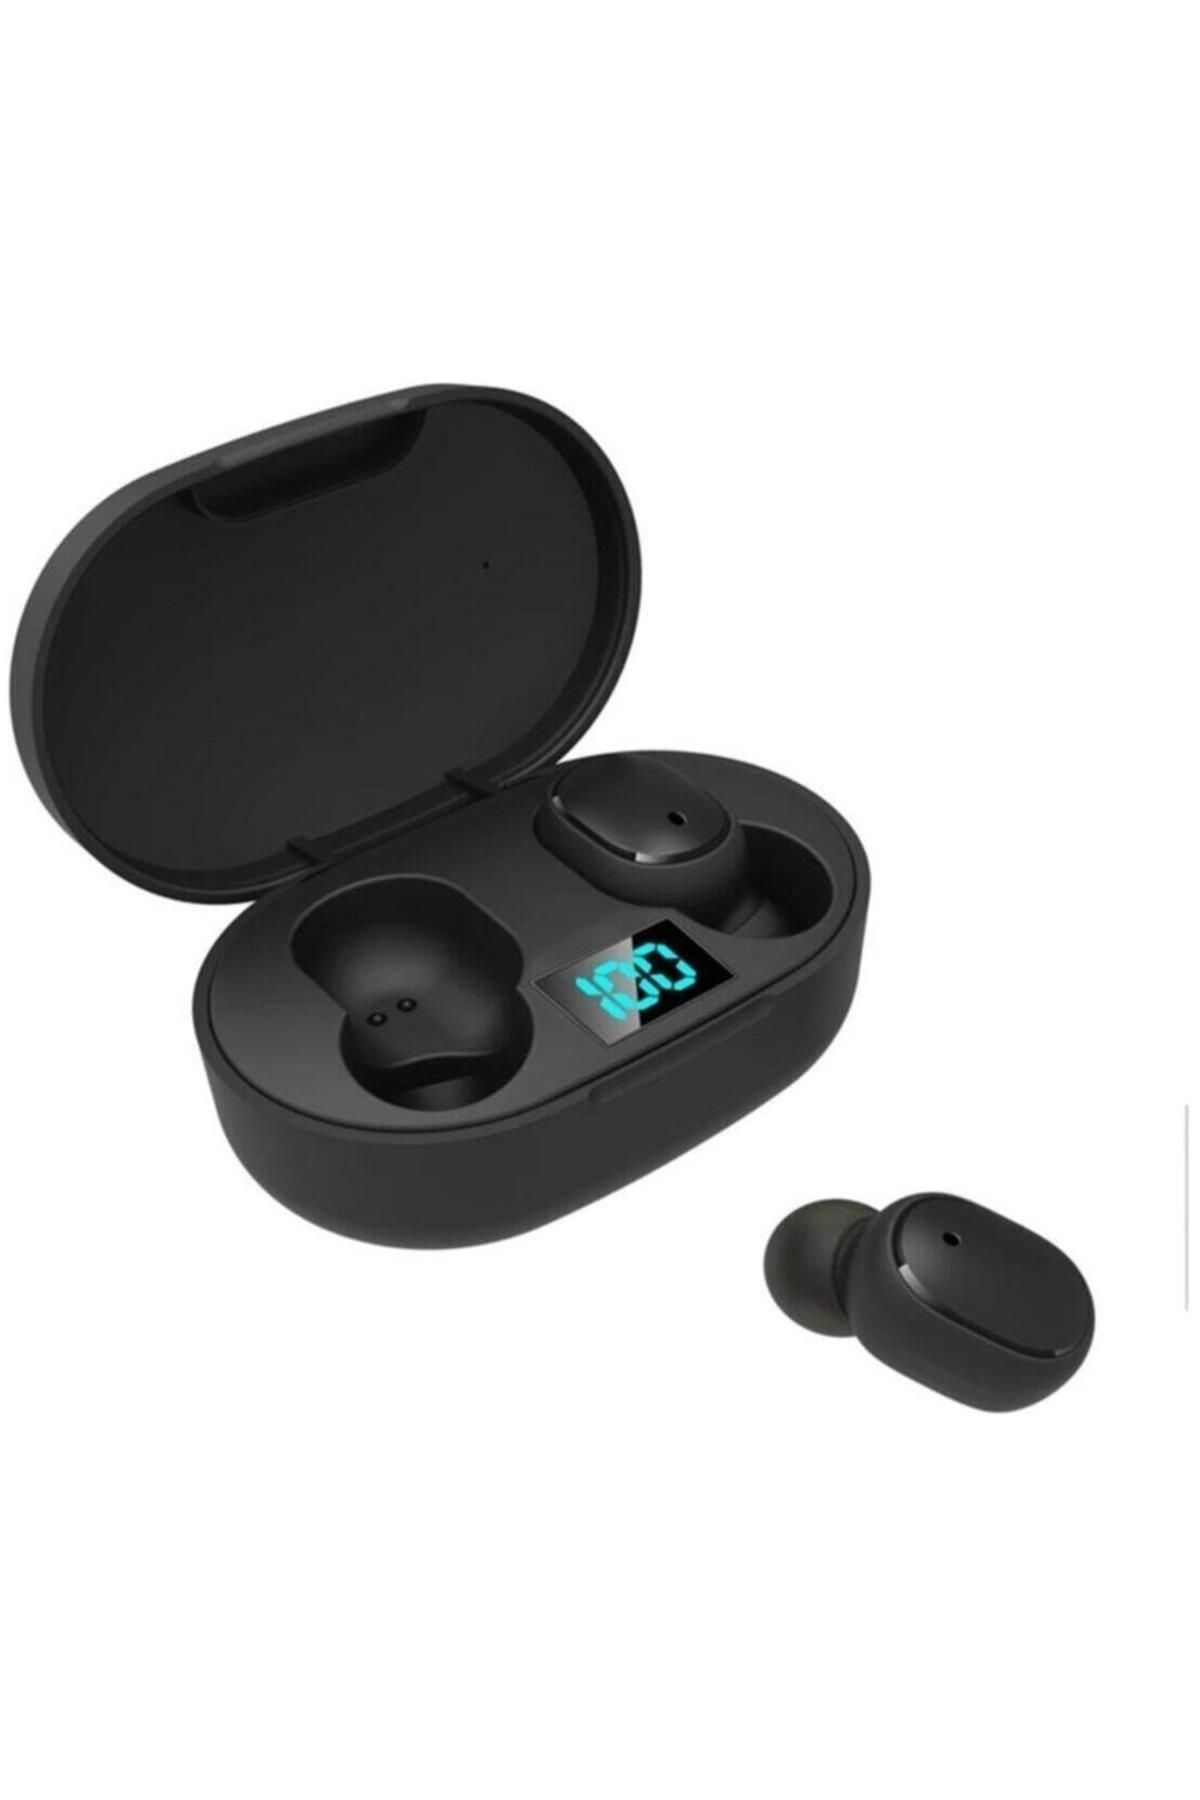 İMEXTECH Imextech E6S True Şarj Göstergeli Bluetooth Kulaklık